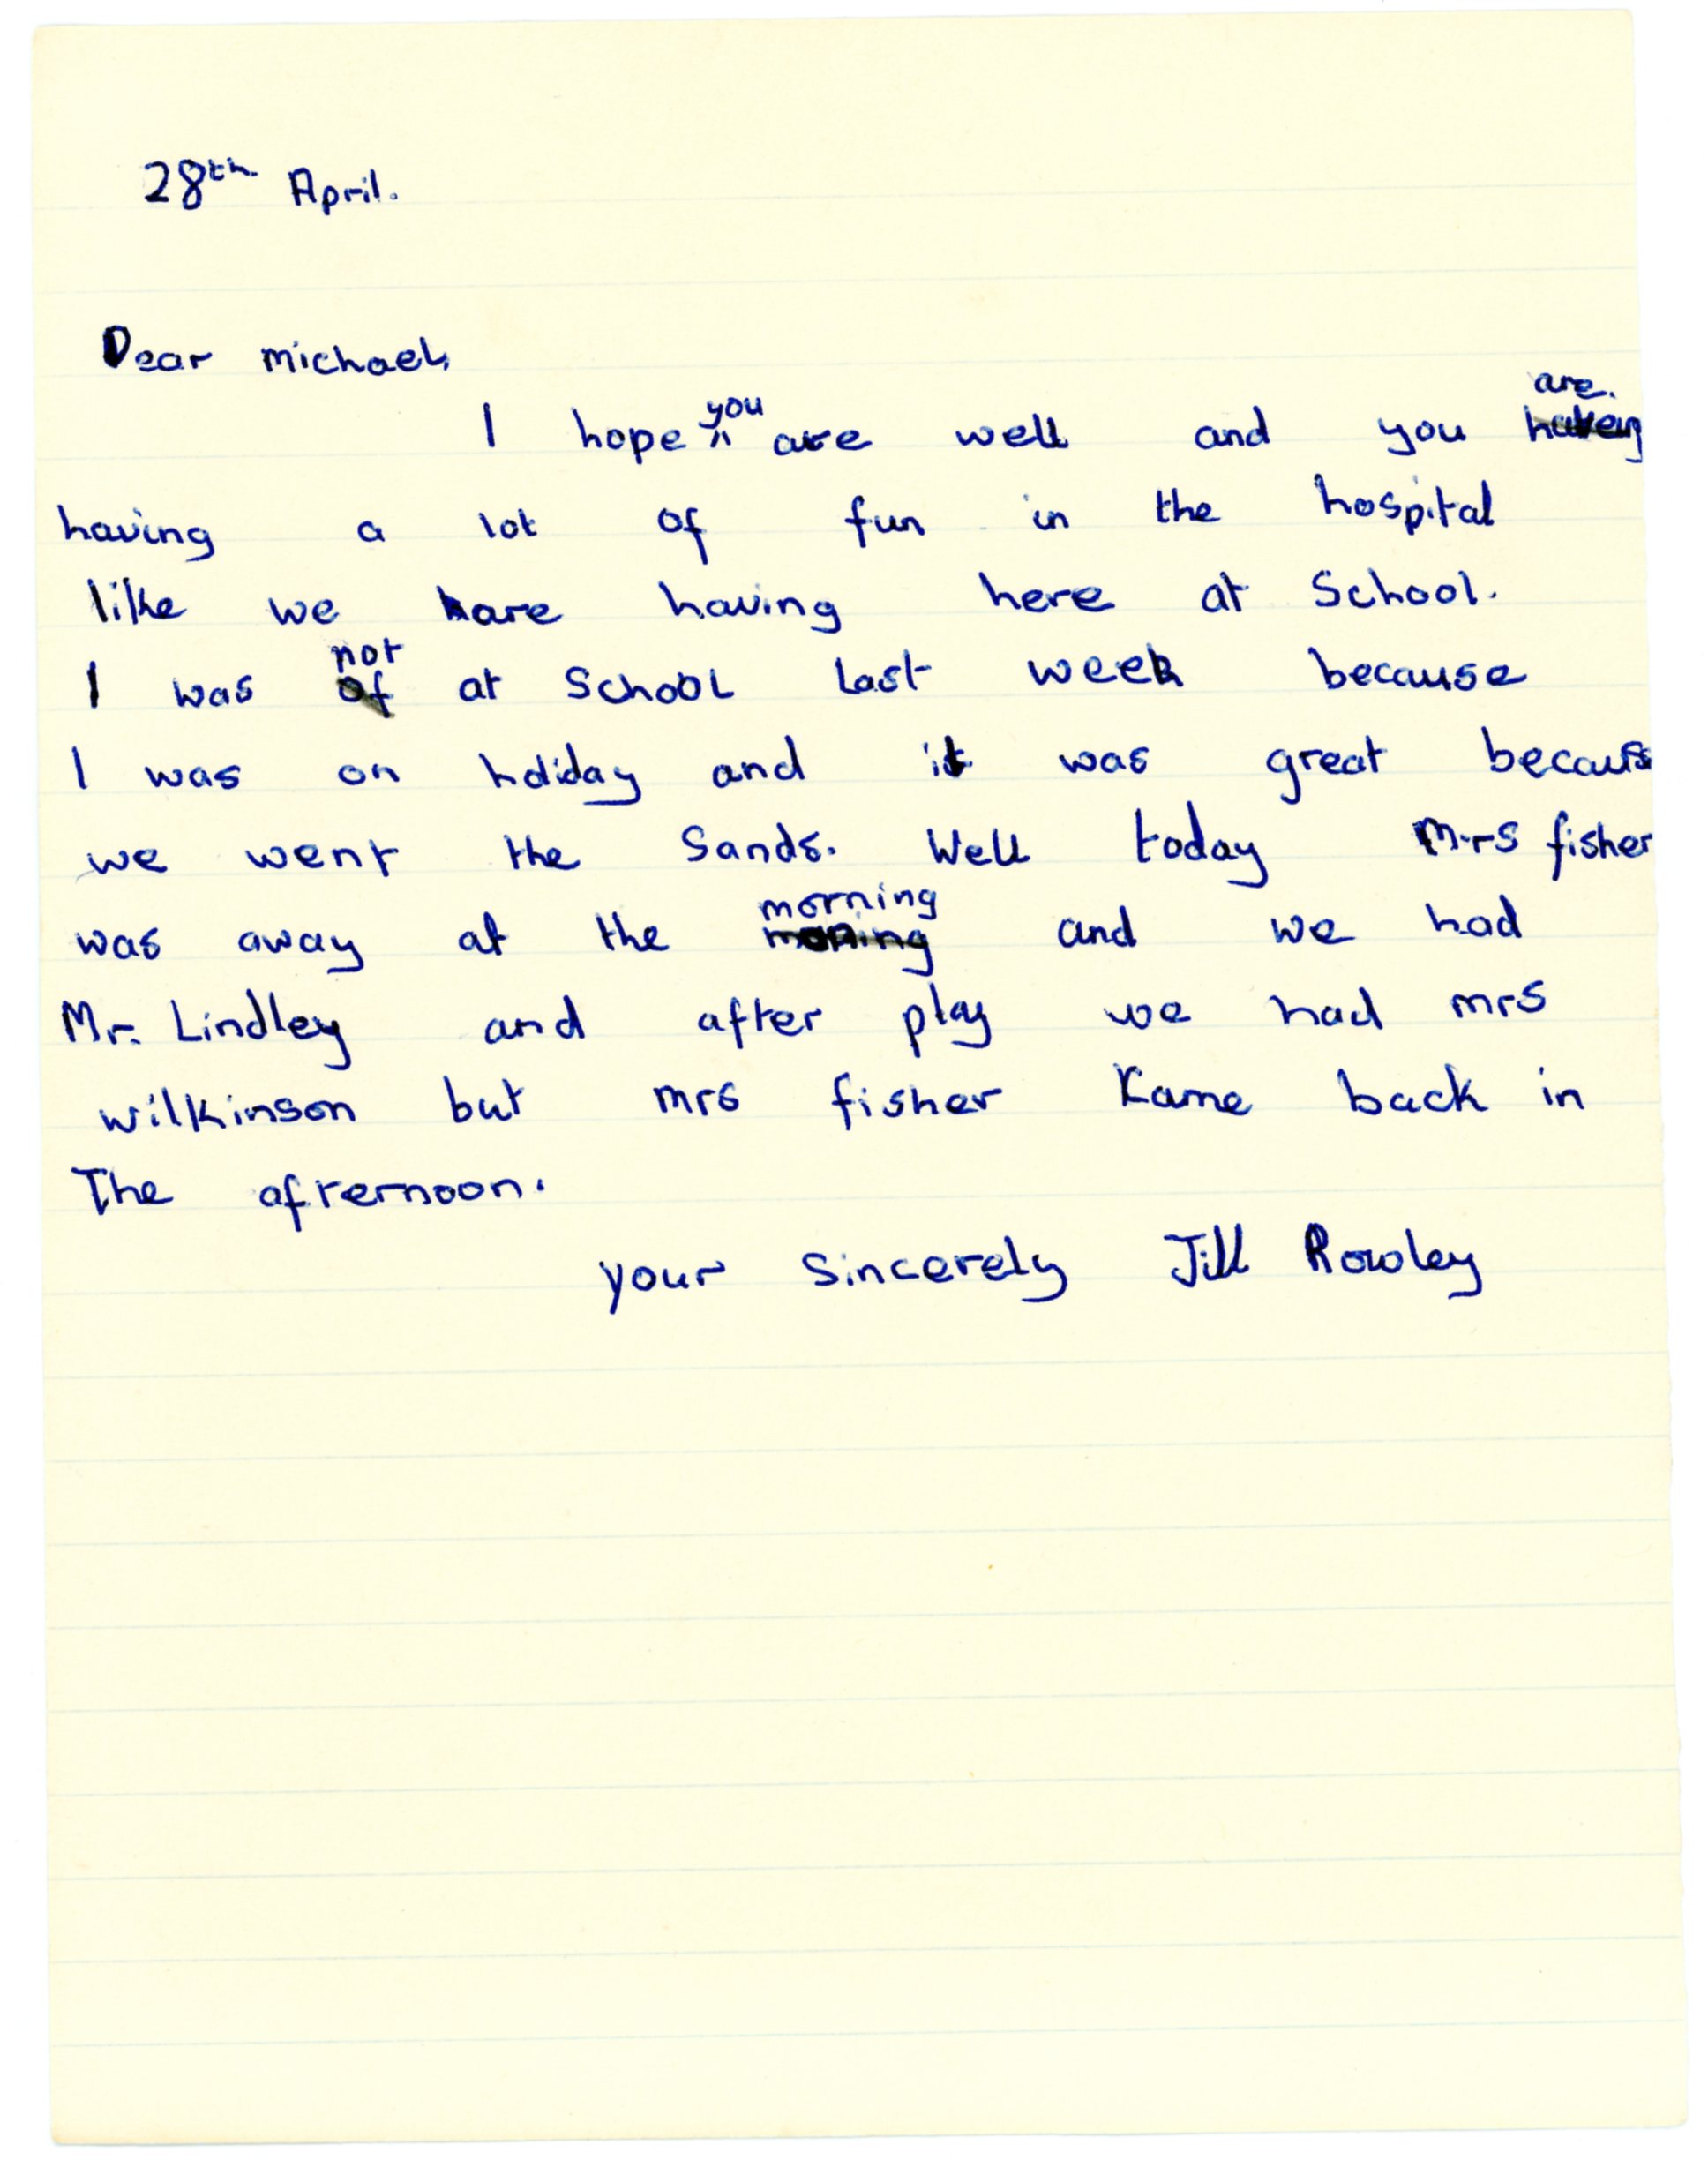 Jill Rowley's original letter